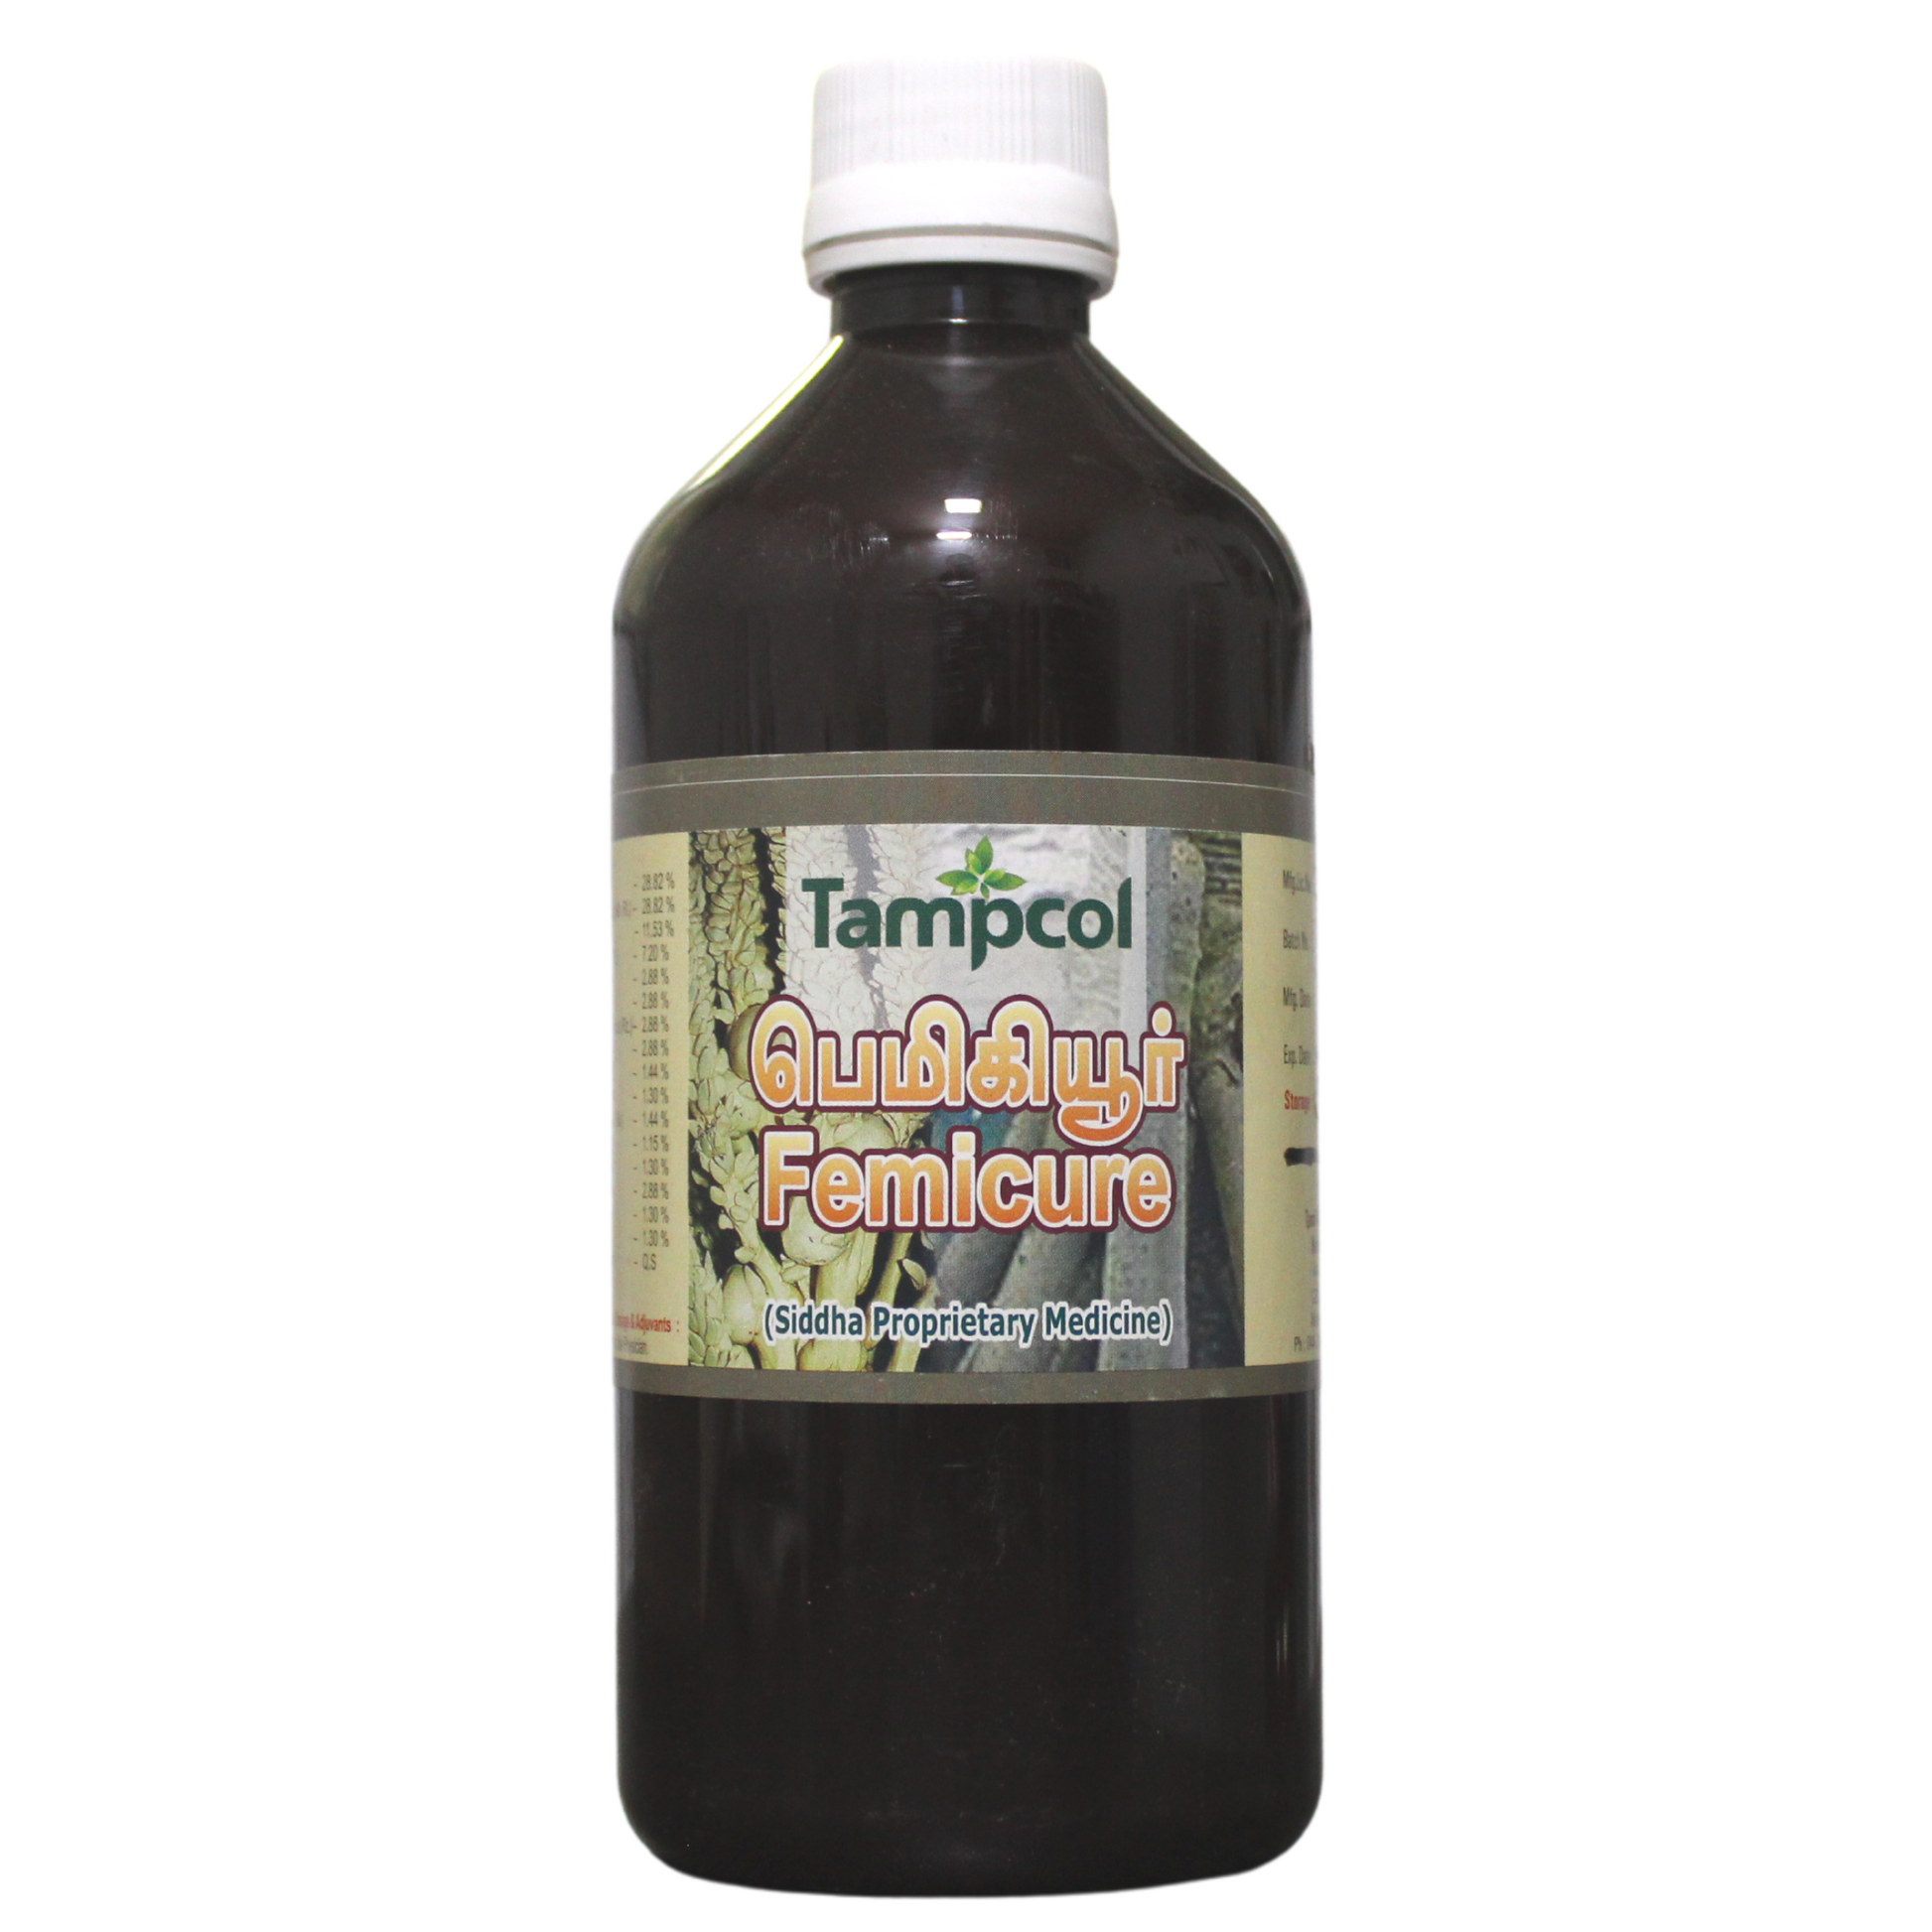 Tampcol Femicure Syrup 500ml -  Tampcol - Medizzo.com